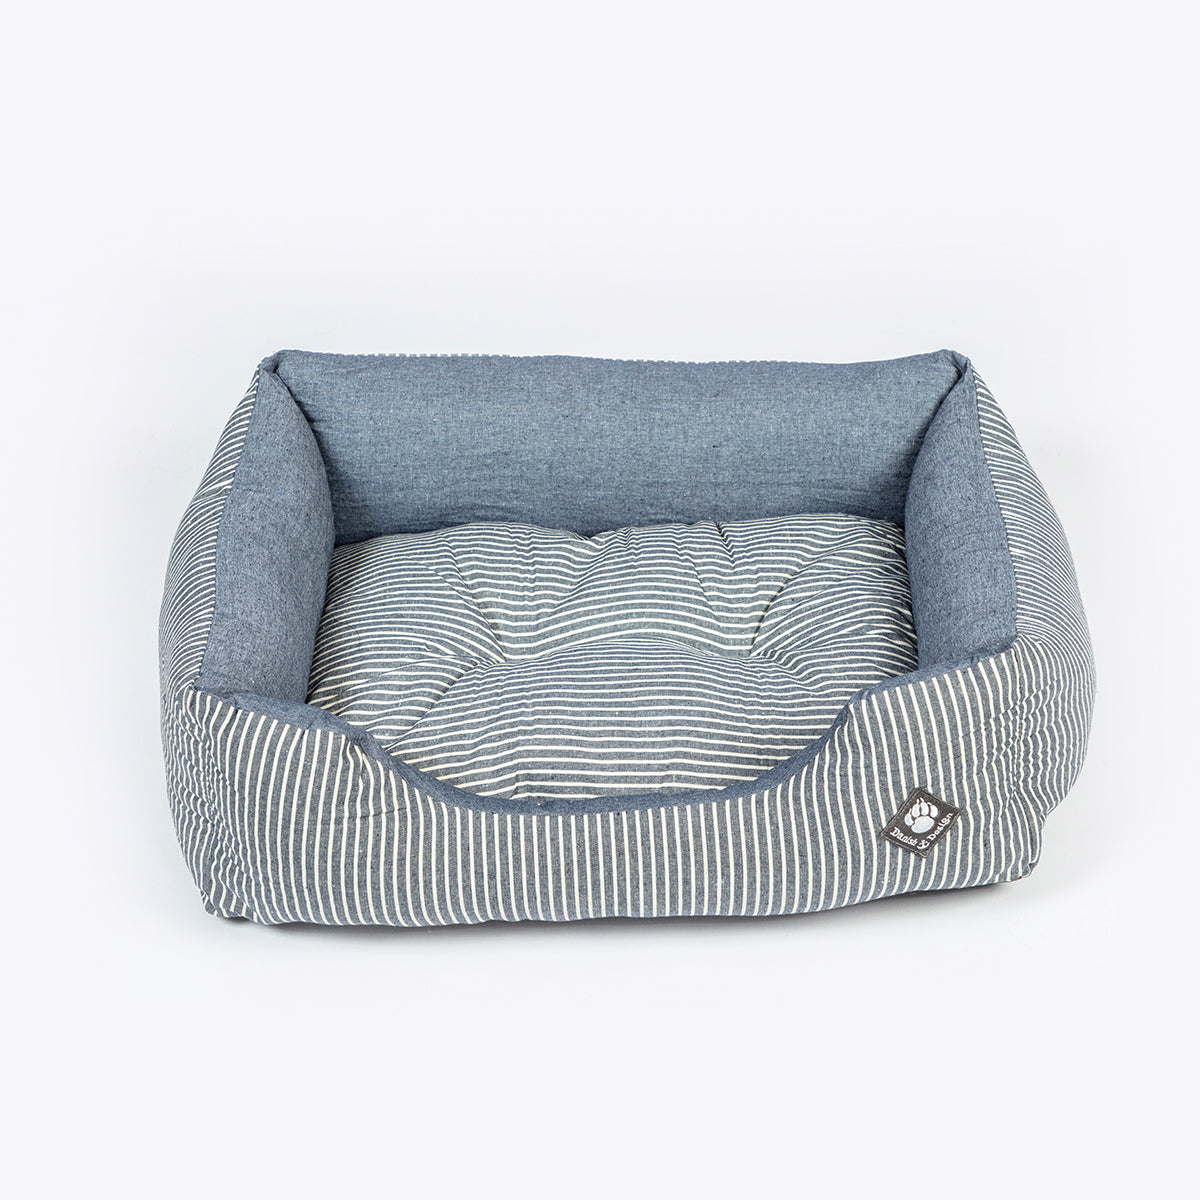 Image of Danish Design Maritime Blue Snuggle Dog Bed - Intermediate 28 inches